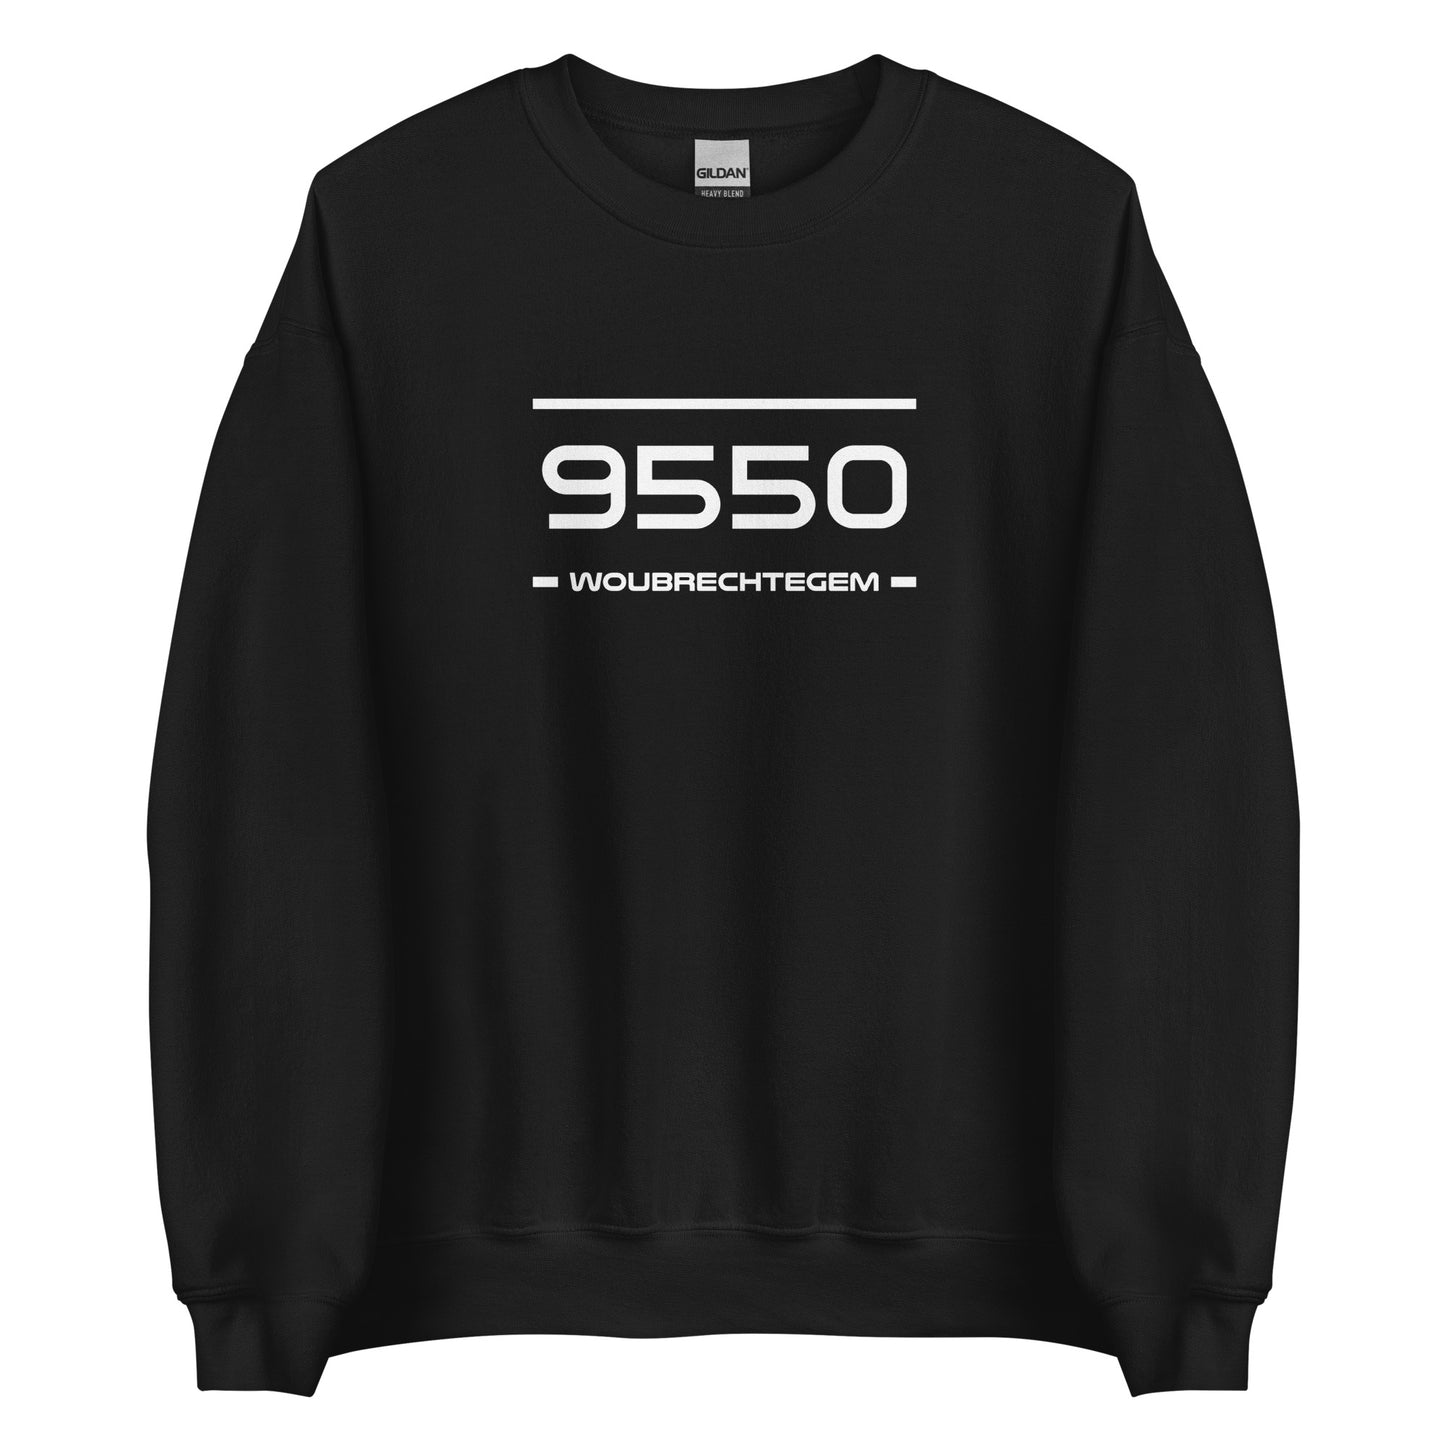 Sweater - 9550 - Woubrechtegem  (M/V)